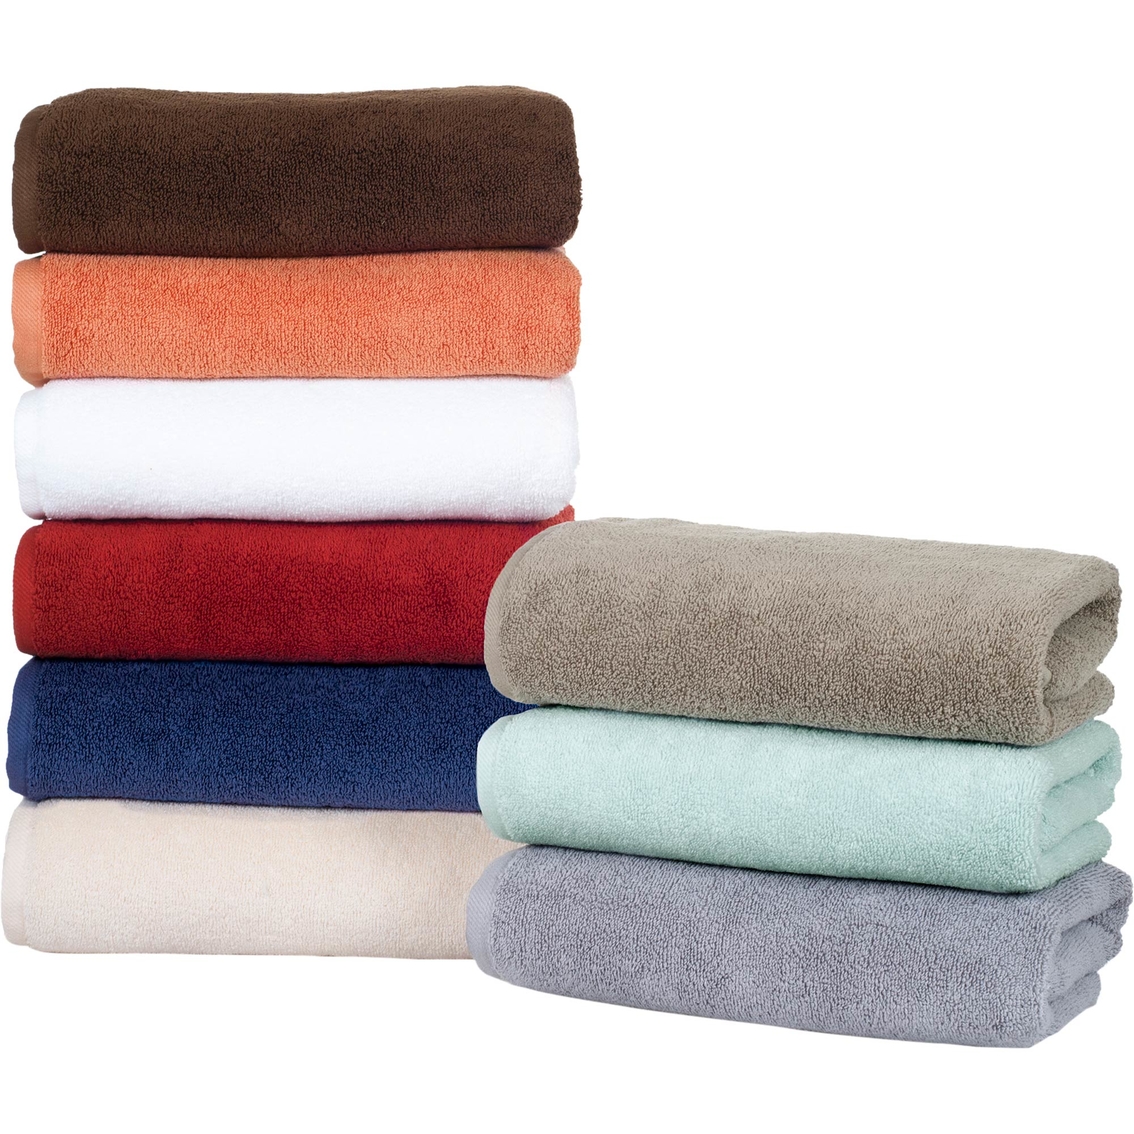 Lavish Home 100% Cotton Zero Twist 6 Pc Towel Set - Image 4 of 4